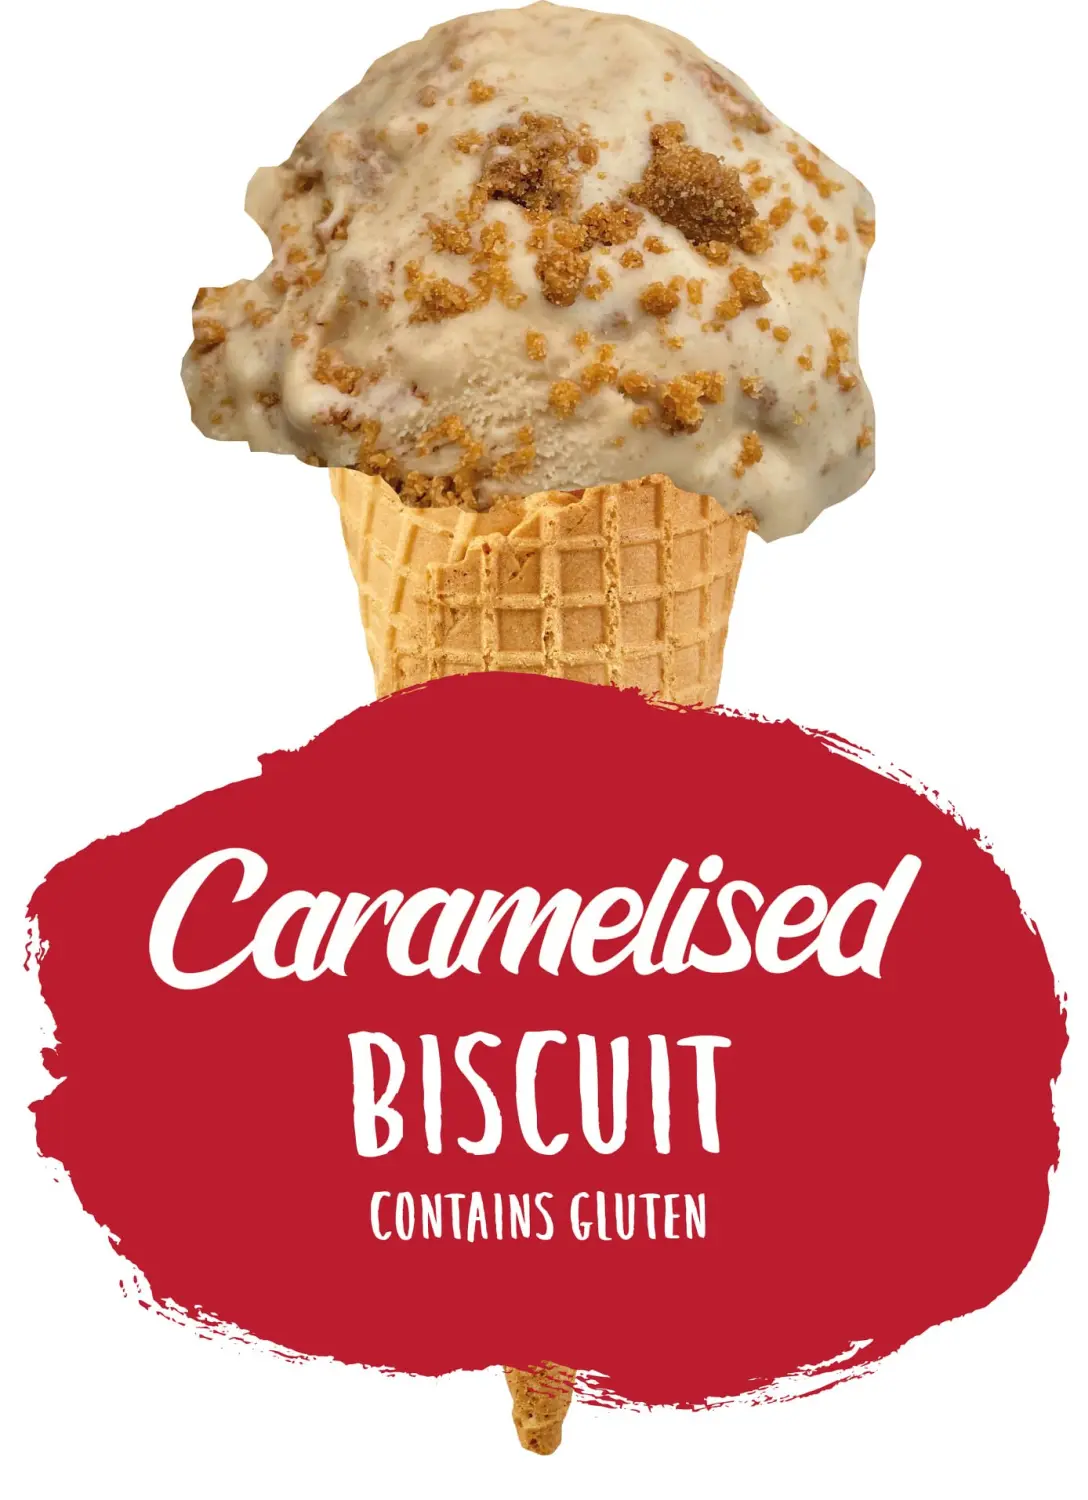 Sevanetti Caramelised Biscuit Ice Cream